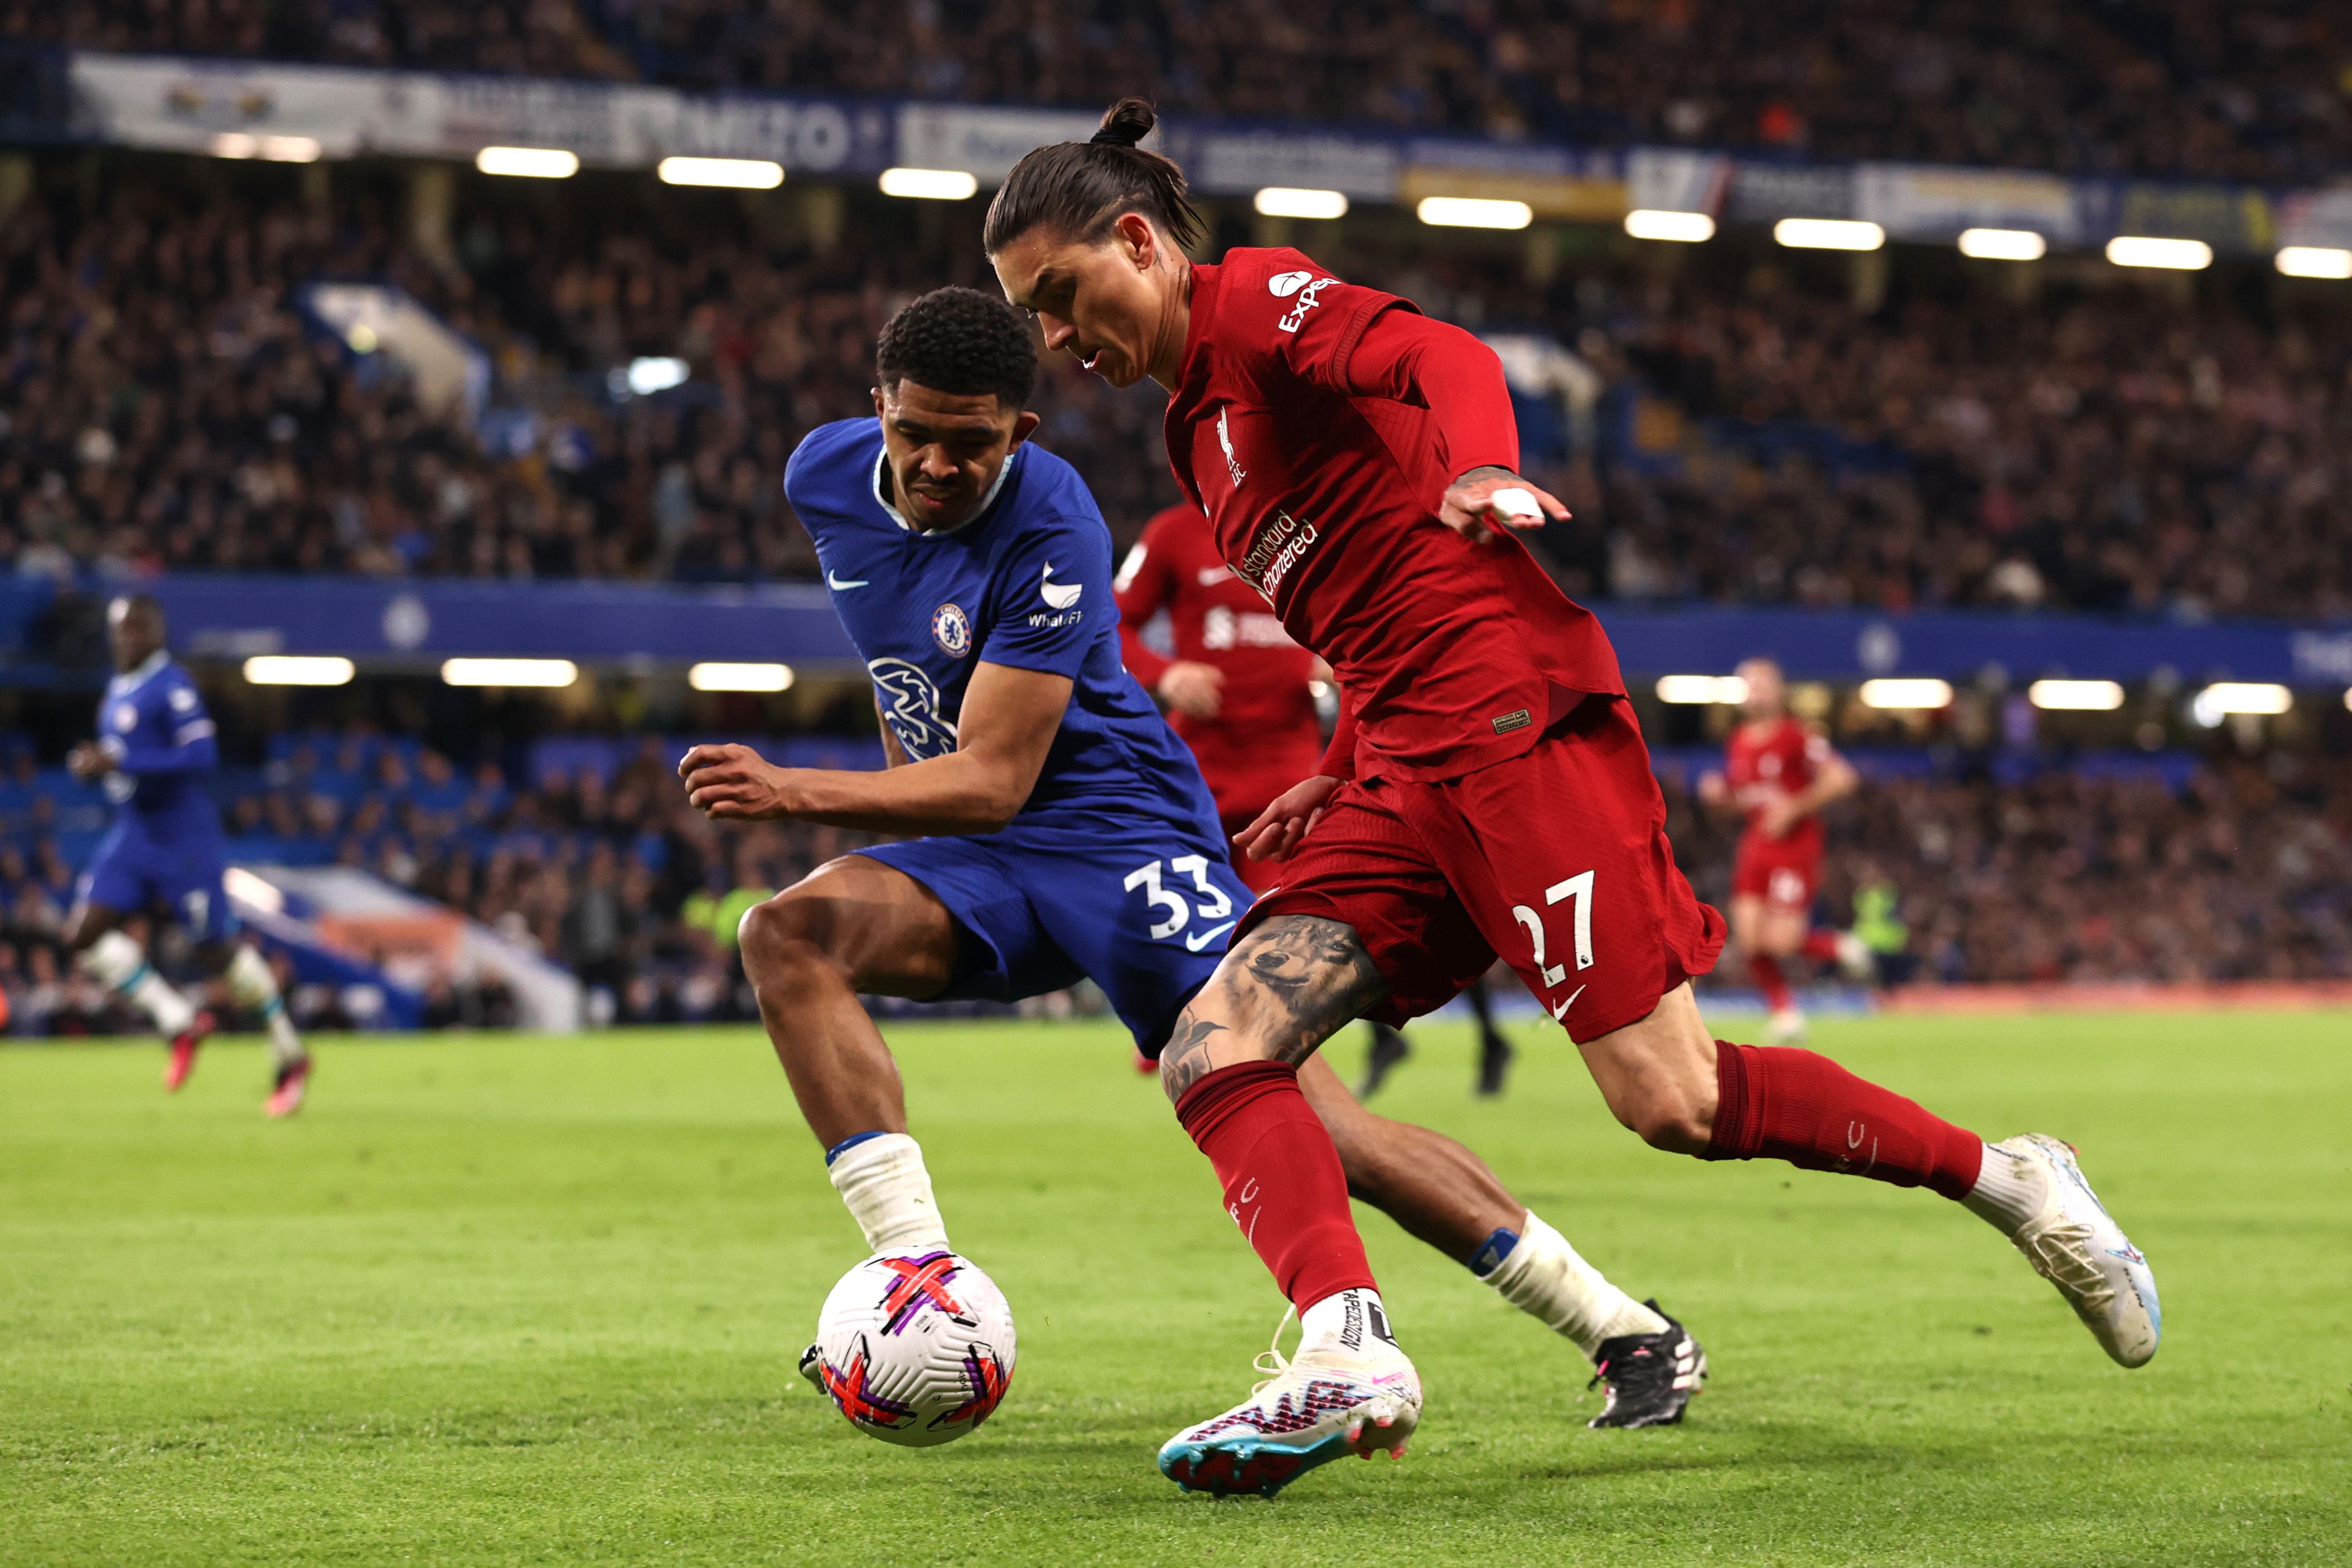 Darwin Nunez of Liverpool runs with the ball vs Chelsea.